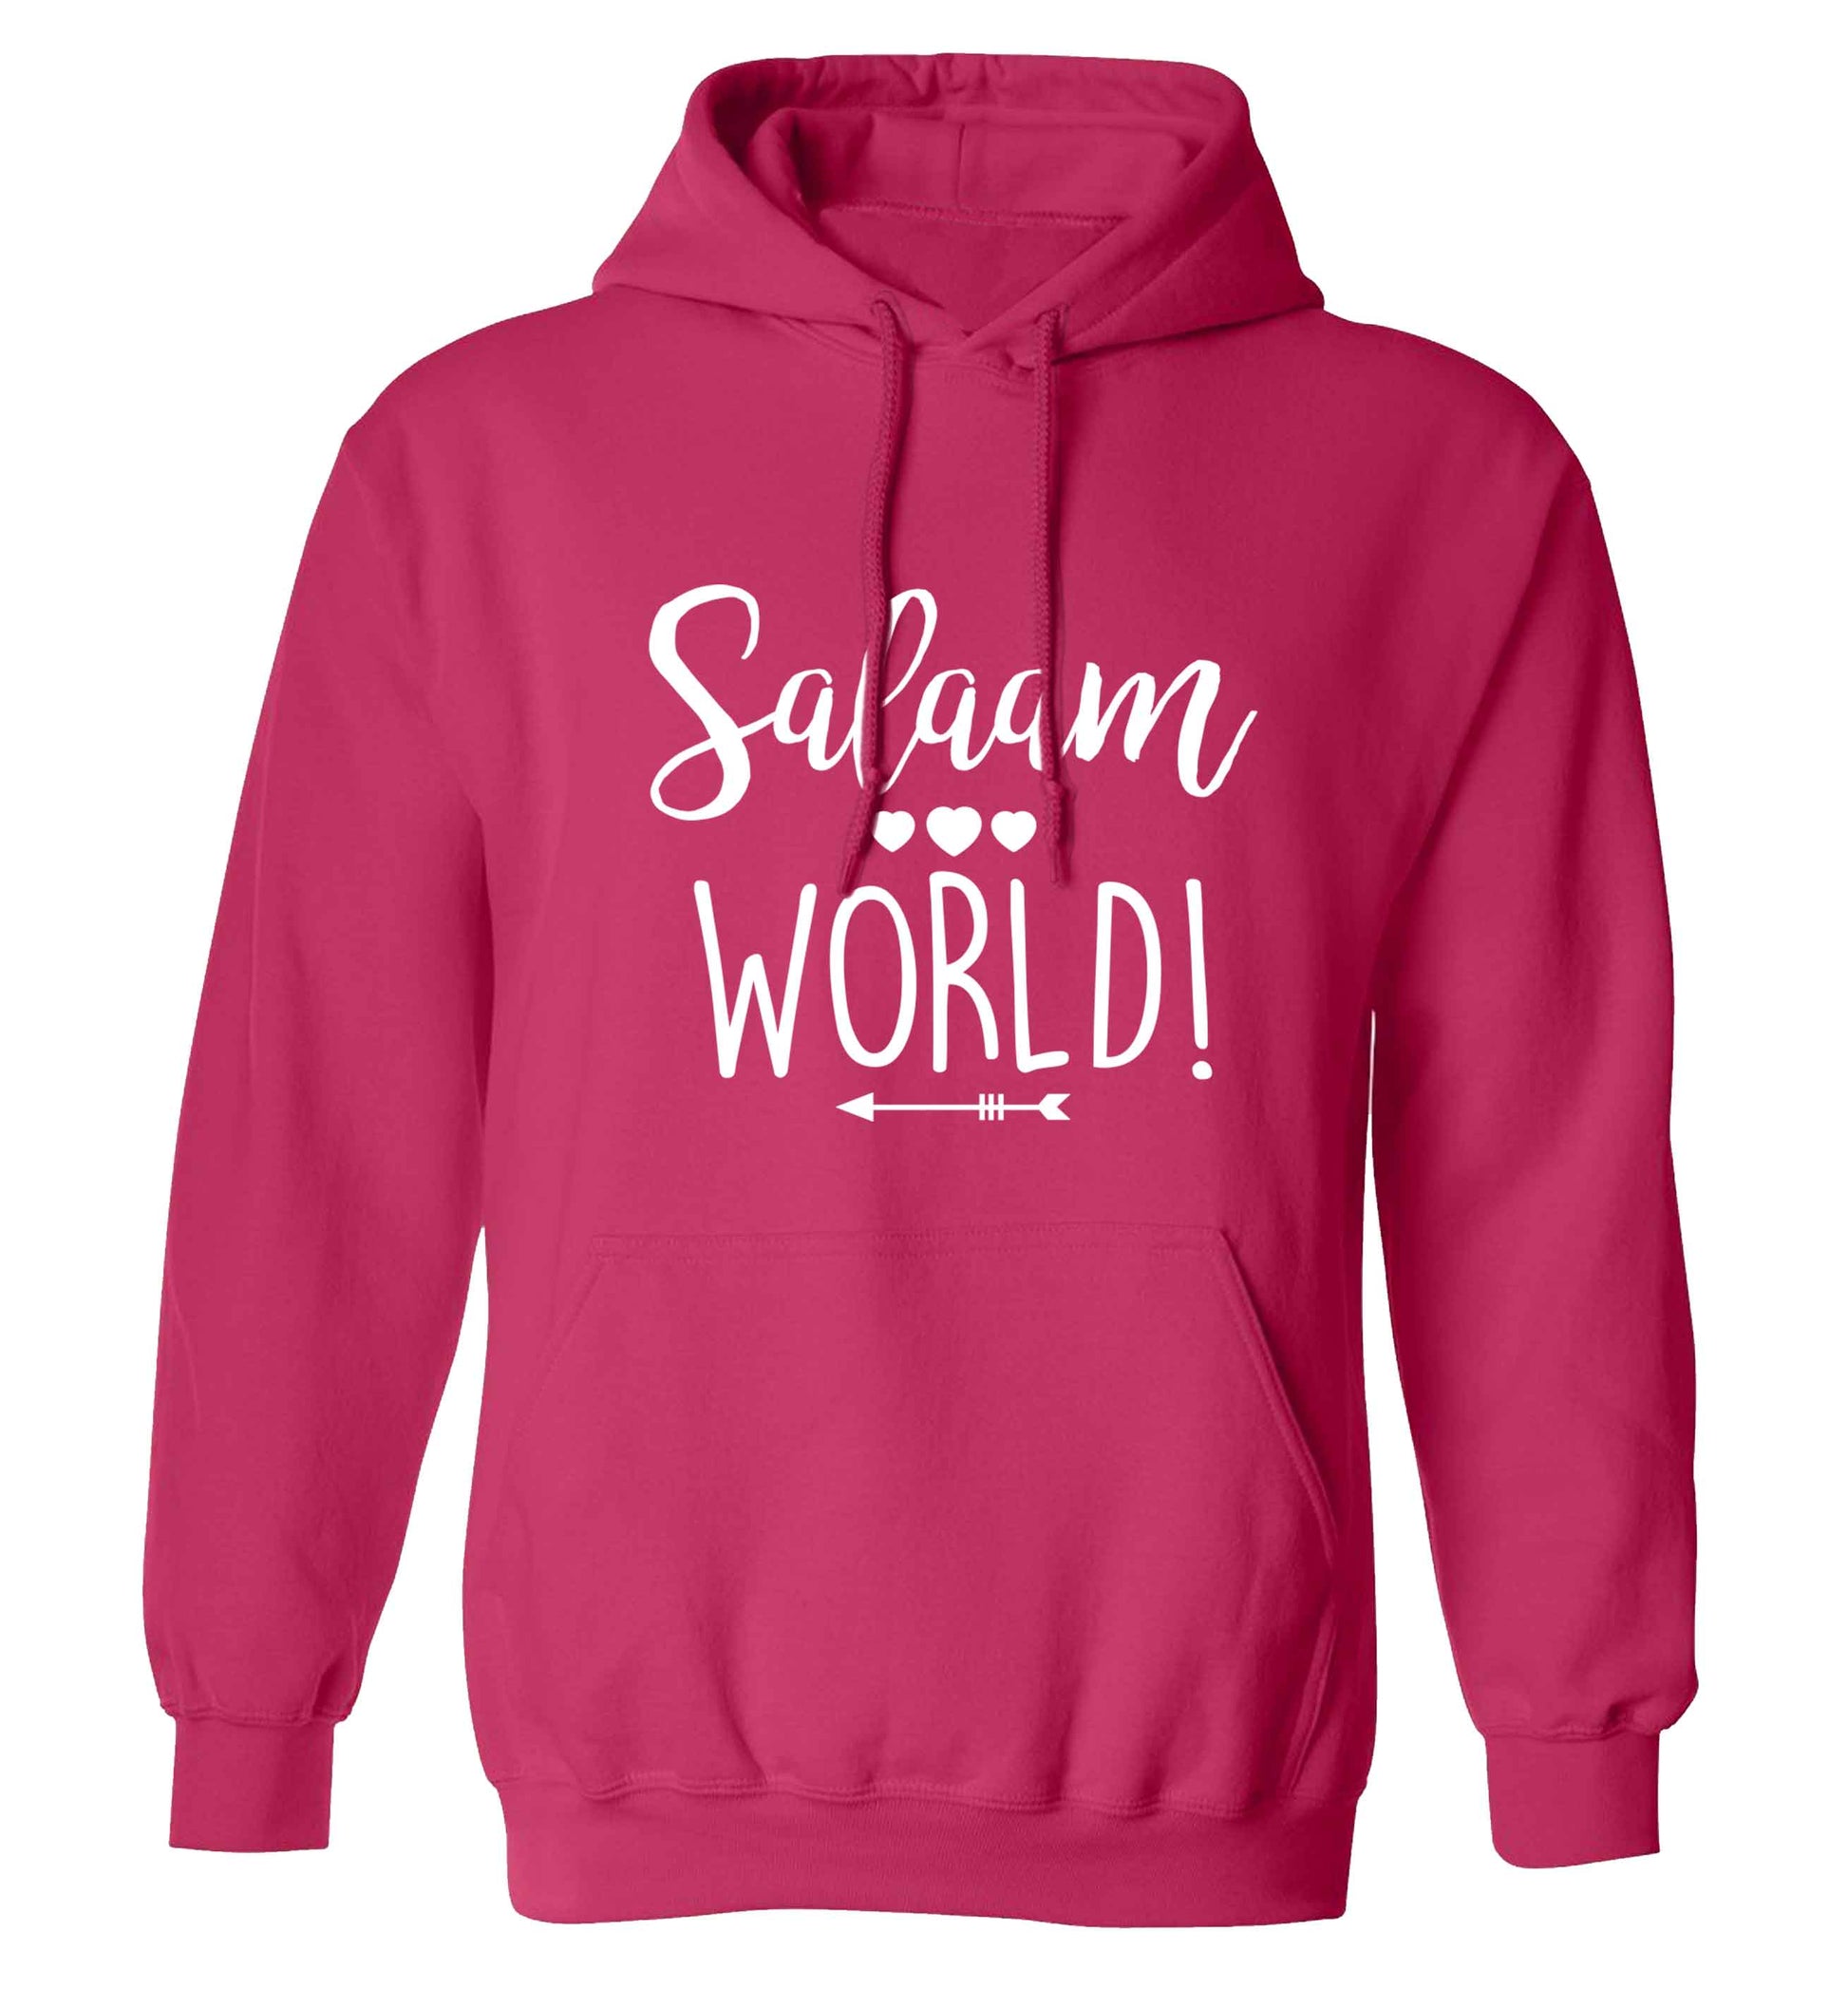 Salaam world adults unisex pink hoodie 2XL